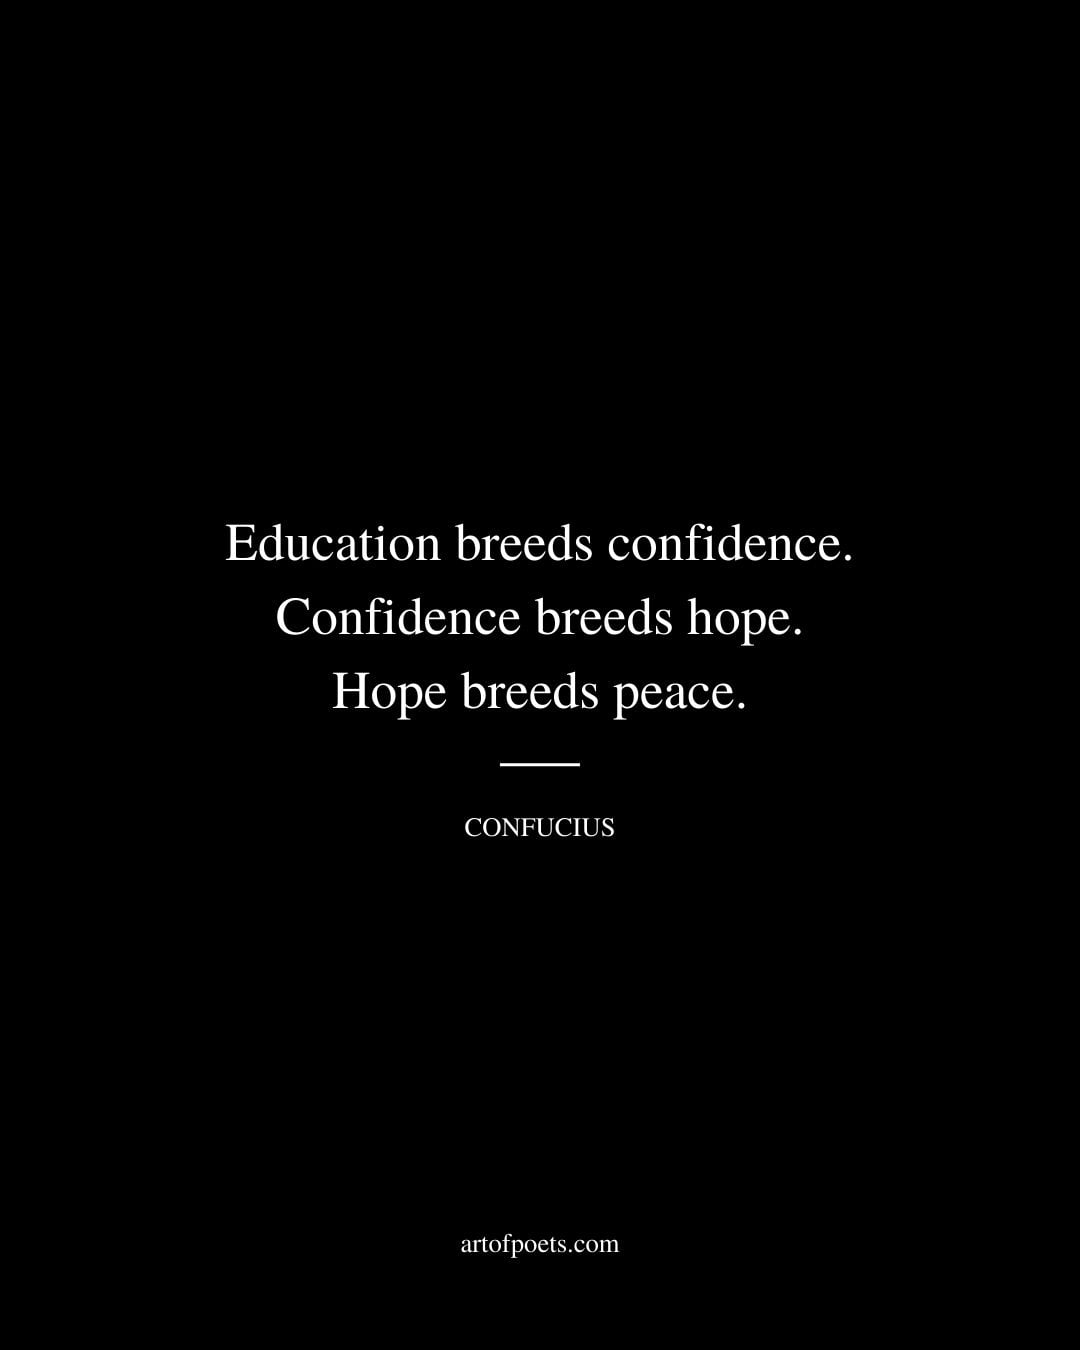 Education breeds confidence. Confidence breeds hope. Hope breeds peace